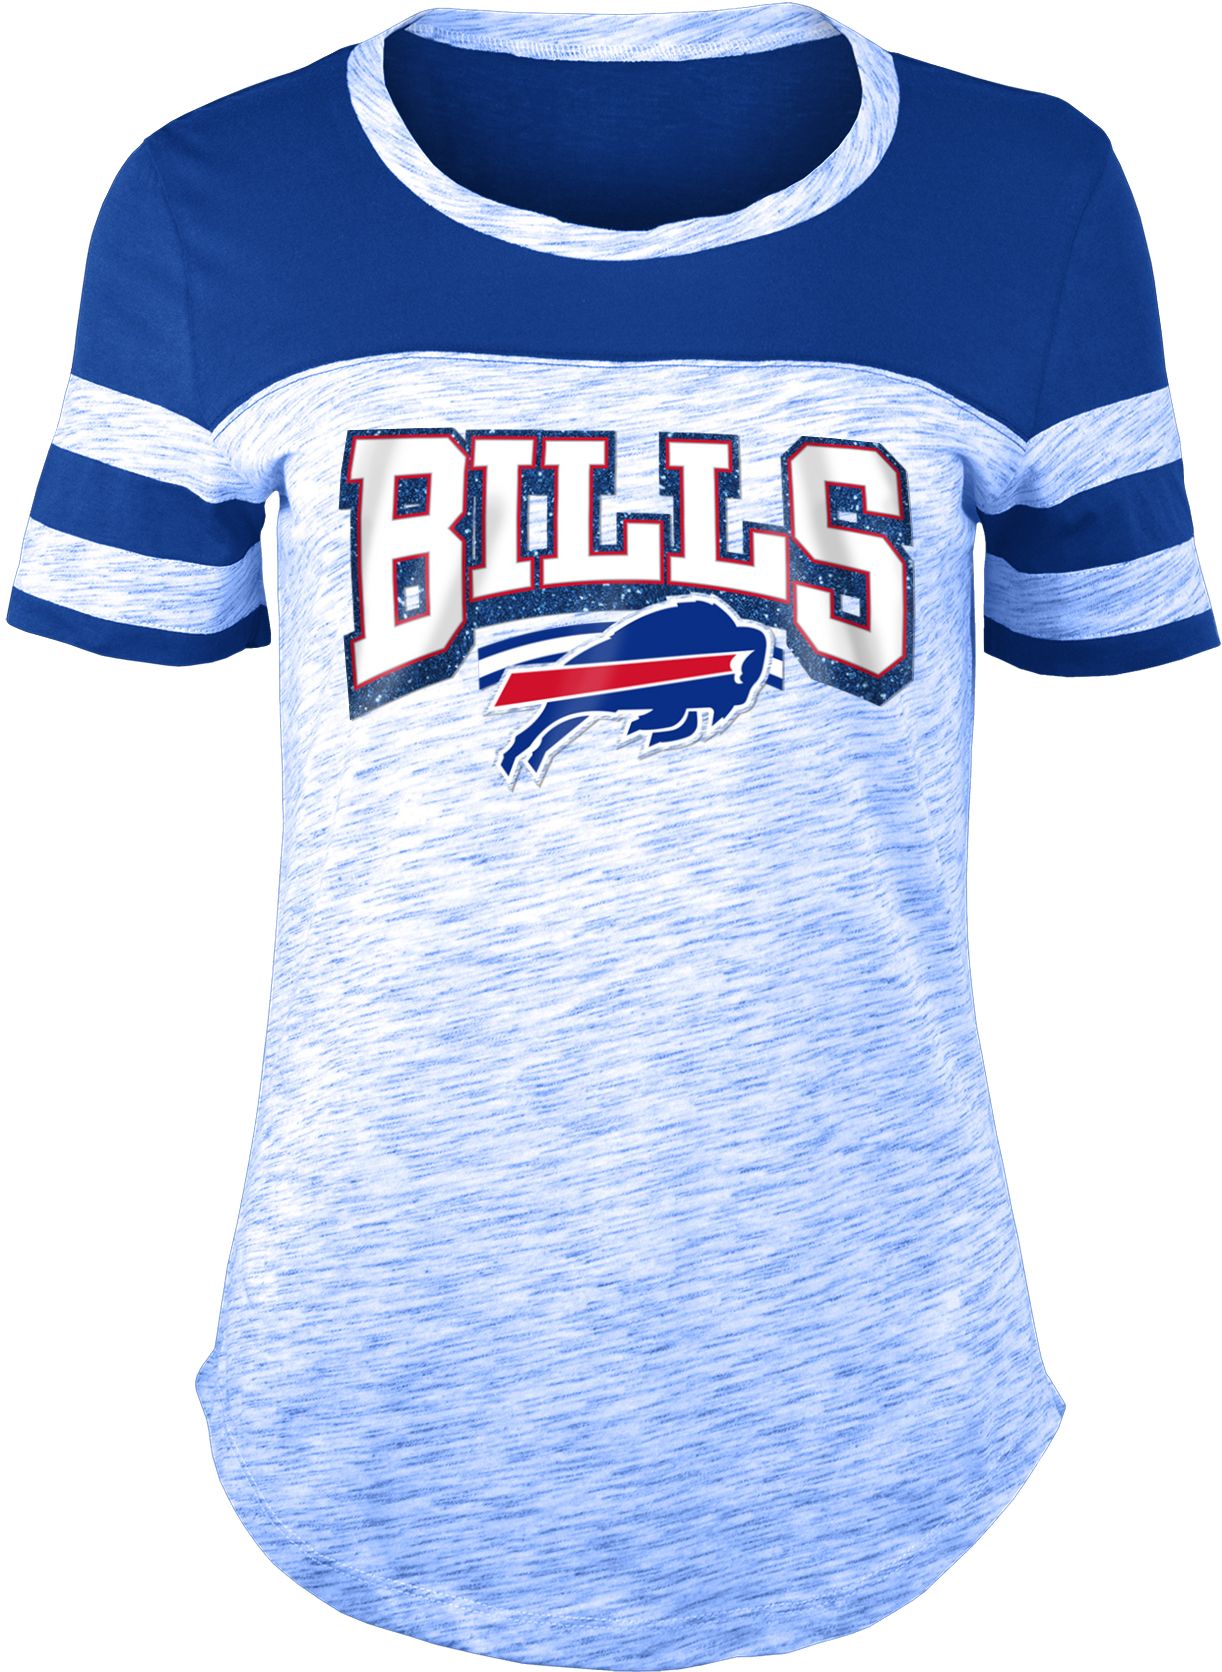 women's buffalo bills jersey